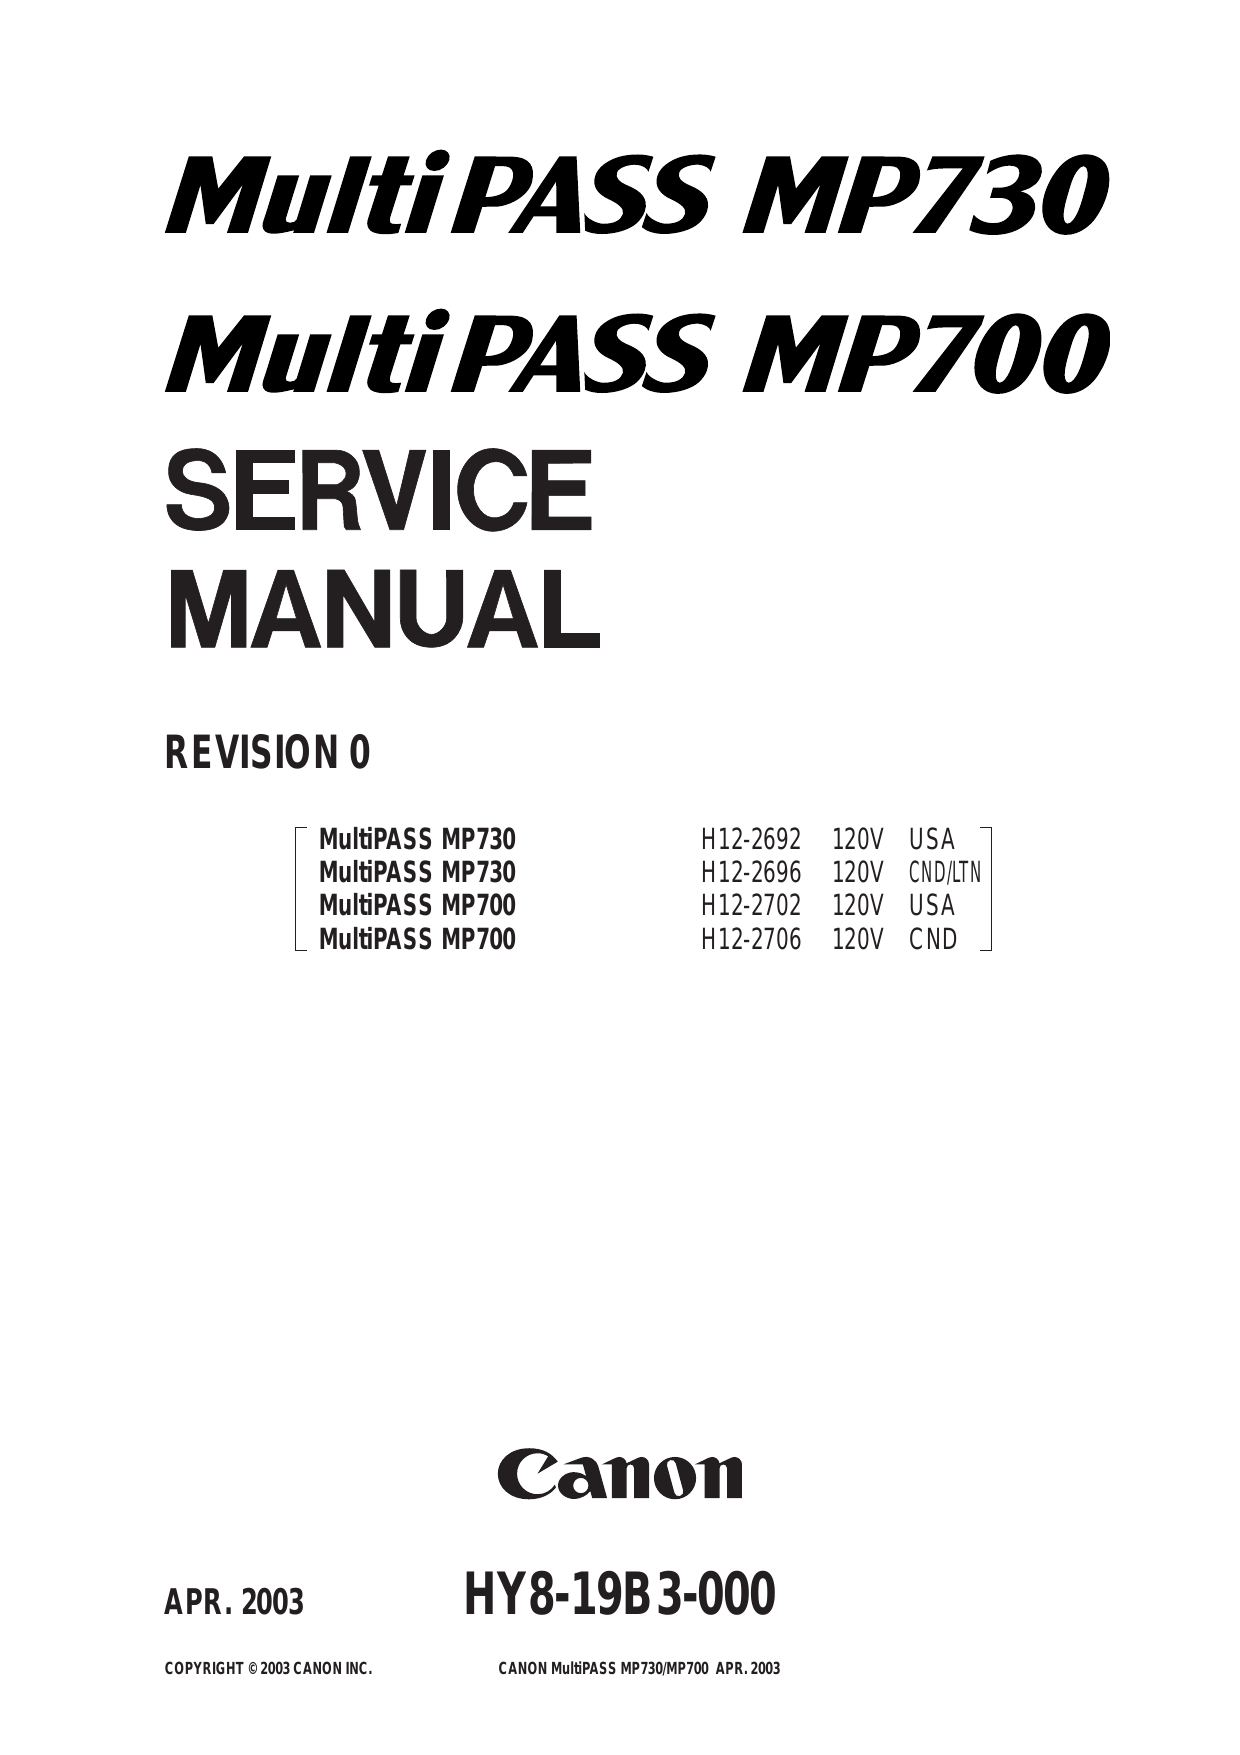 Canon Pixma MP 700, MP 730 multifunction inkjet printer service guide Preview image 2